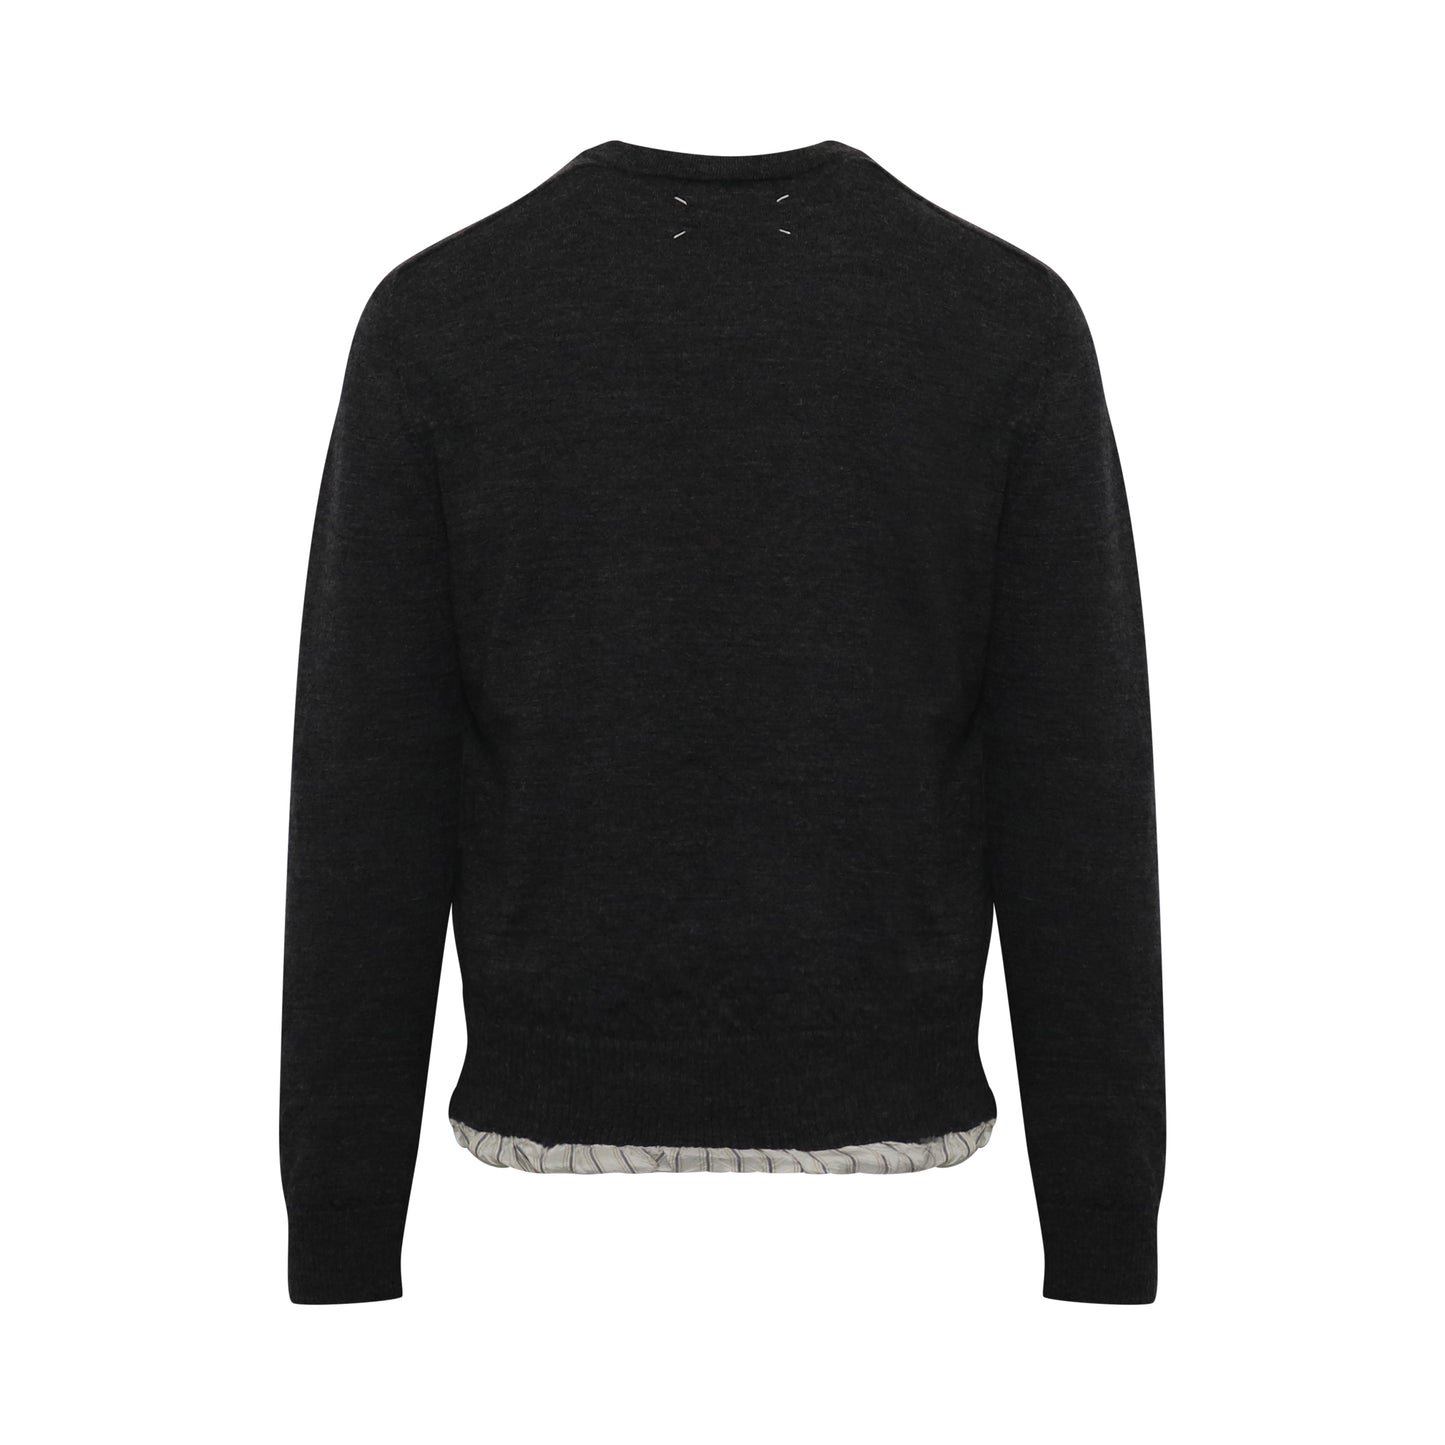 Distressed Knit Layered Sweater in Dark Grey